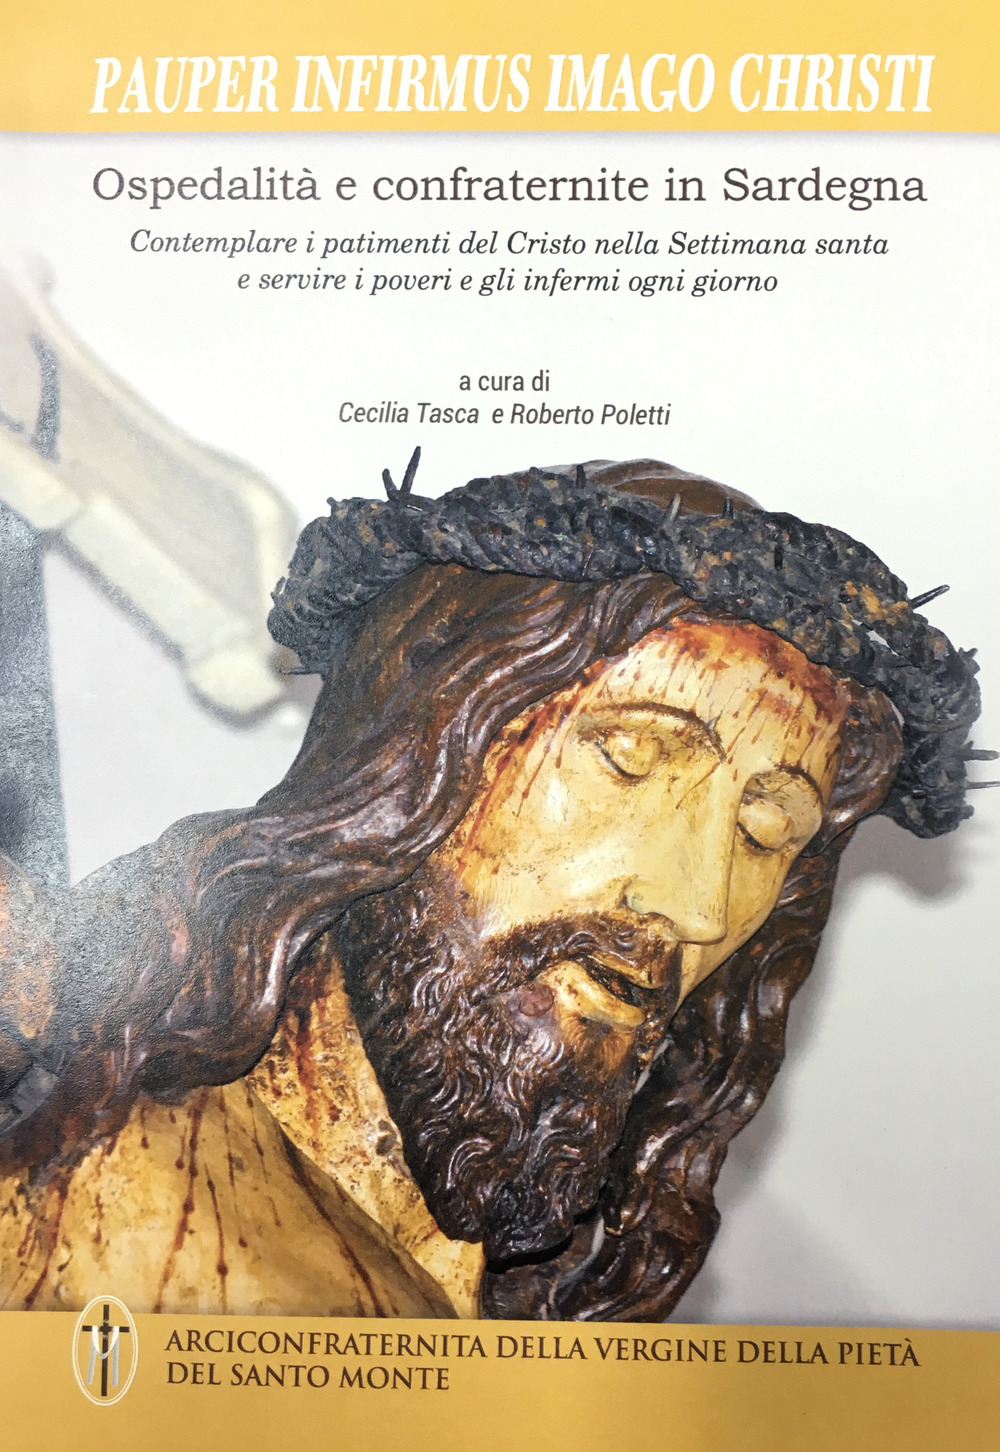 Pauper infirmus imago christi. Ospedalità e confraternite in Sardegna